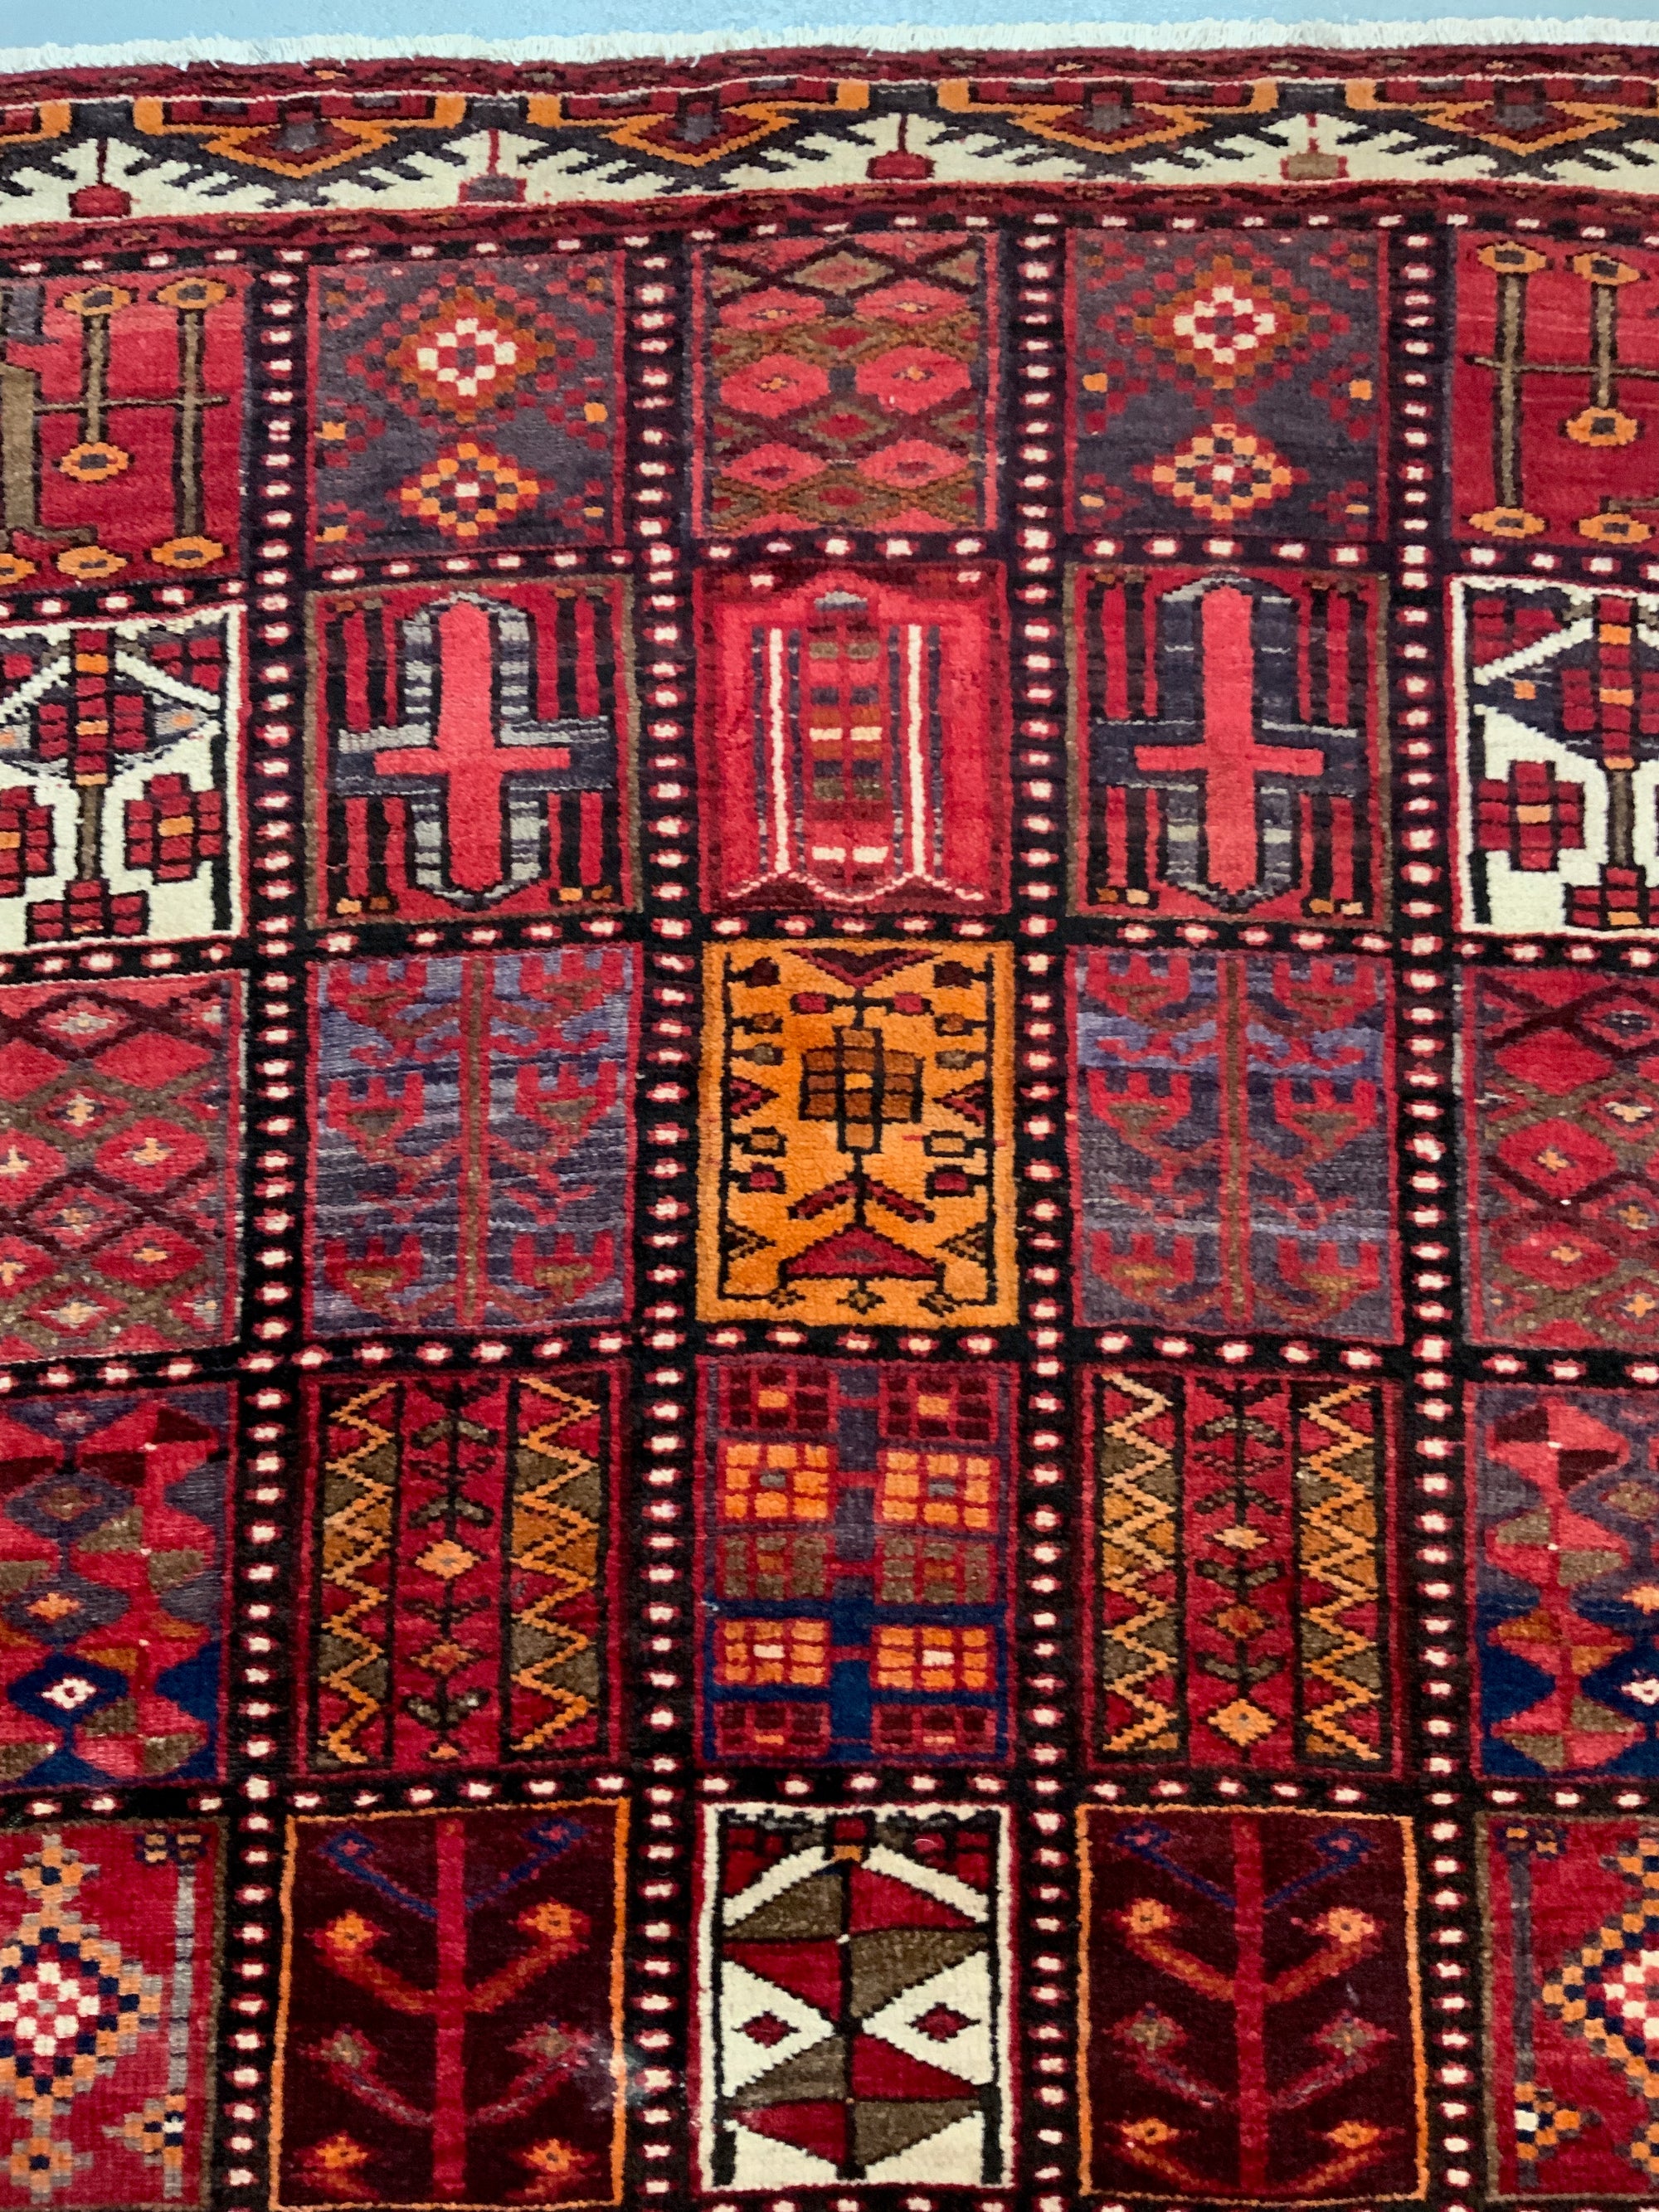 Bactiar modern carpet (328 x 174cm)